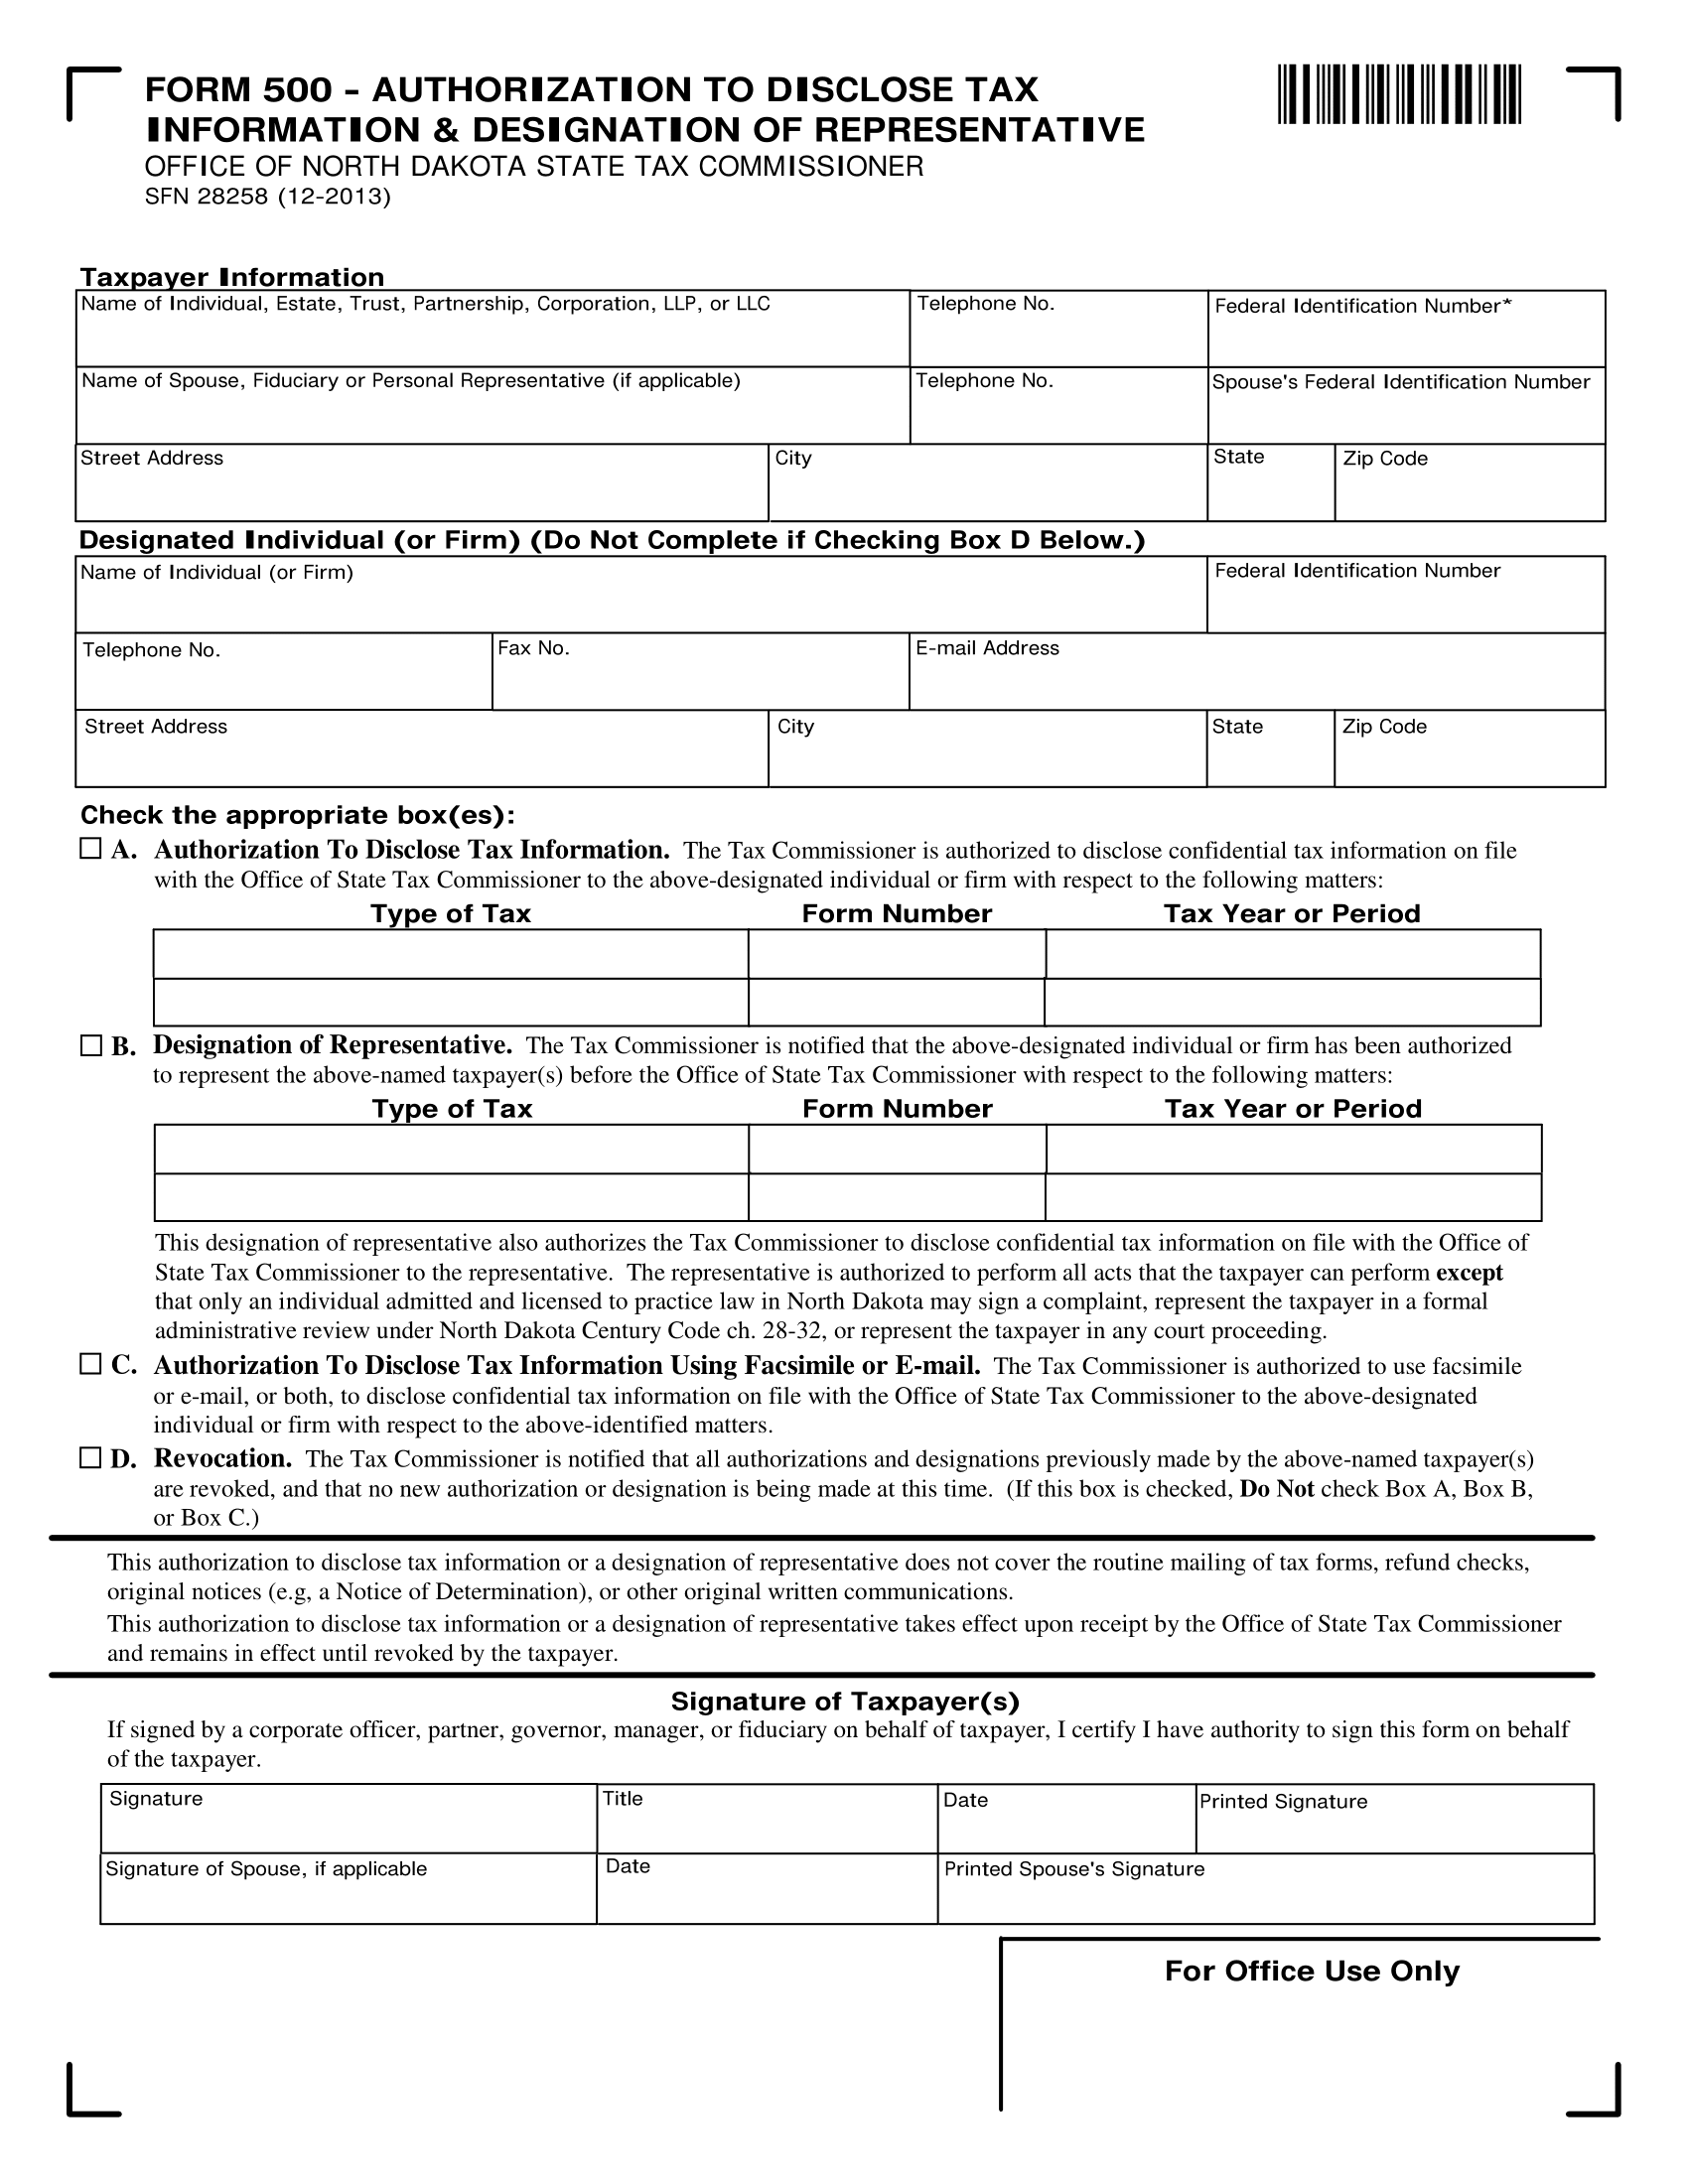 North Dakota Tax Power of Attorney (Form 500)